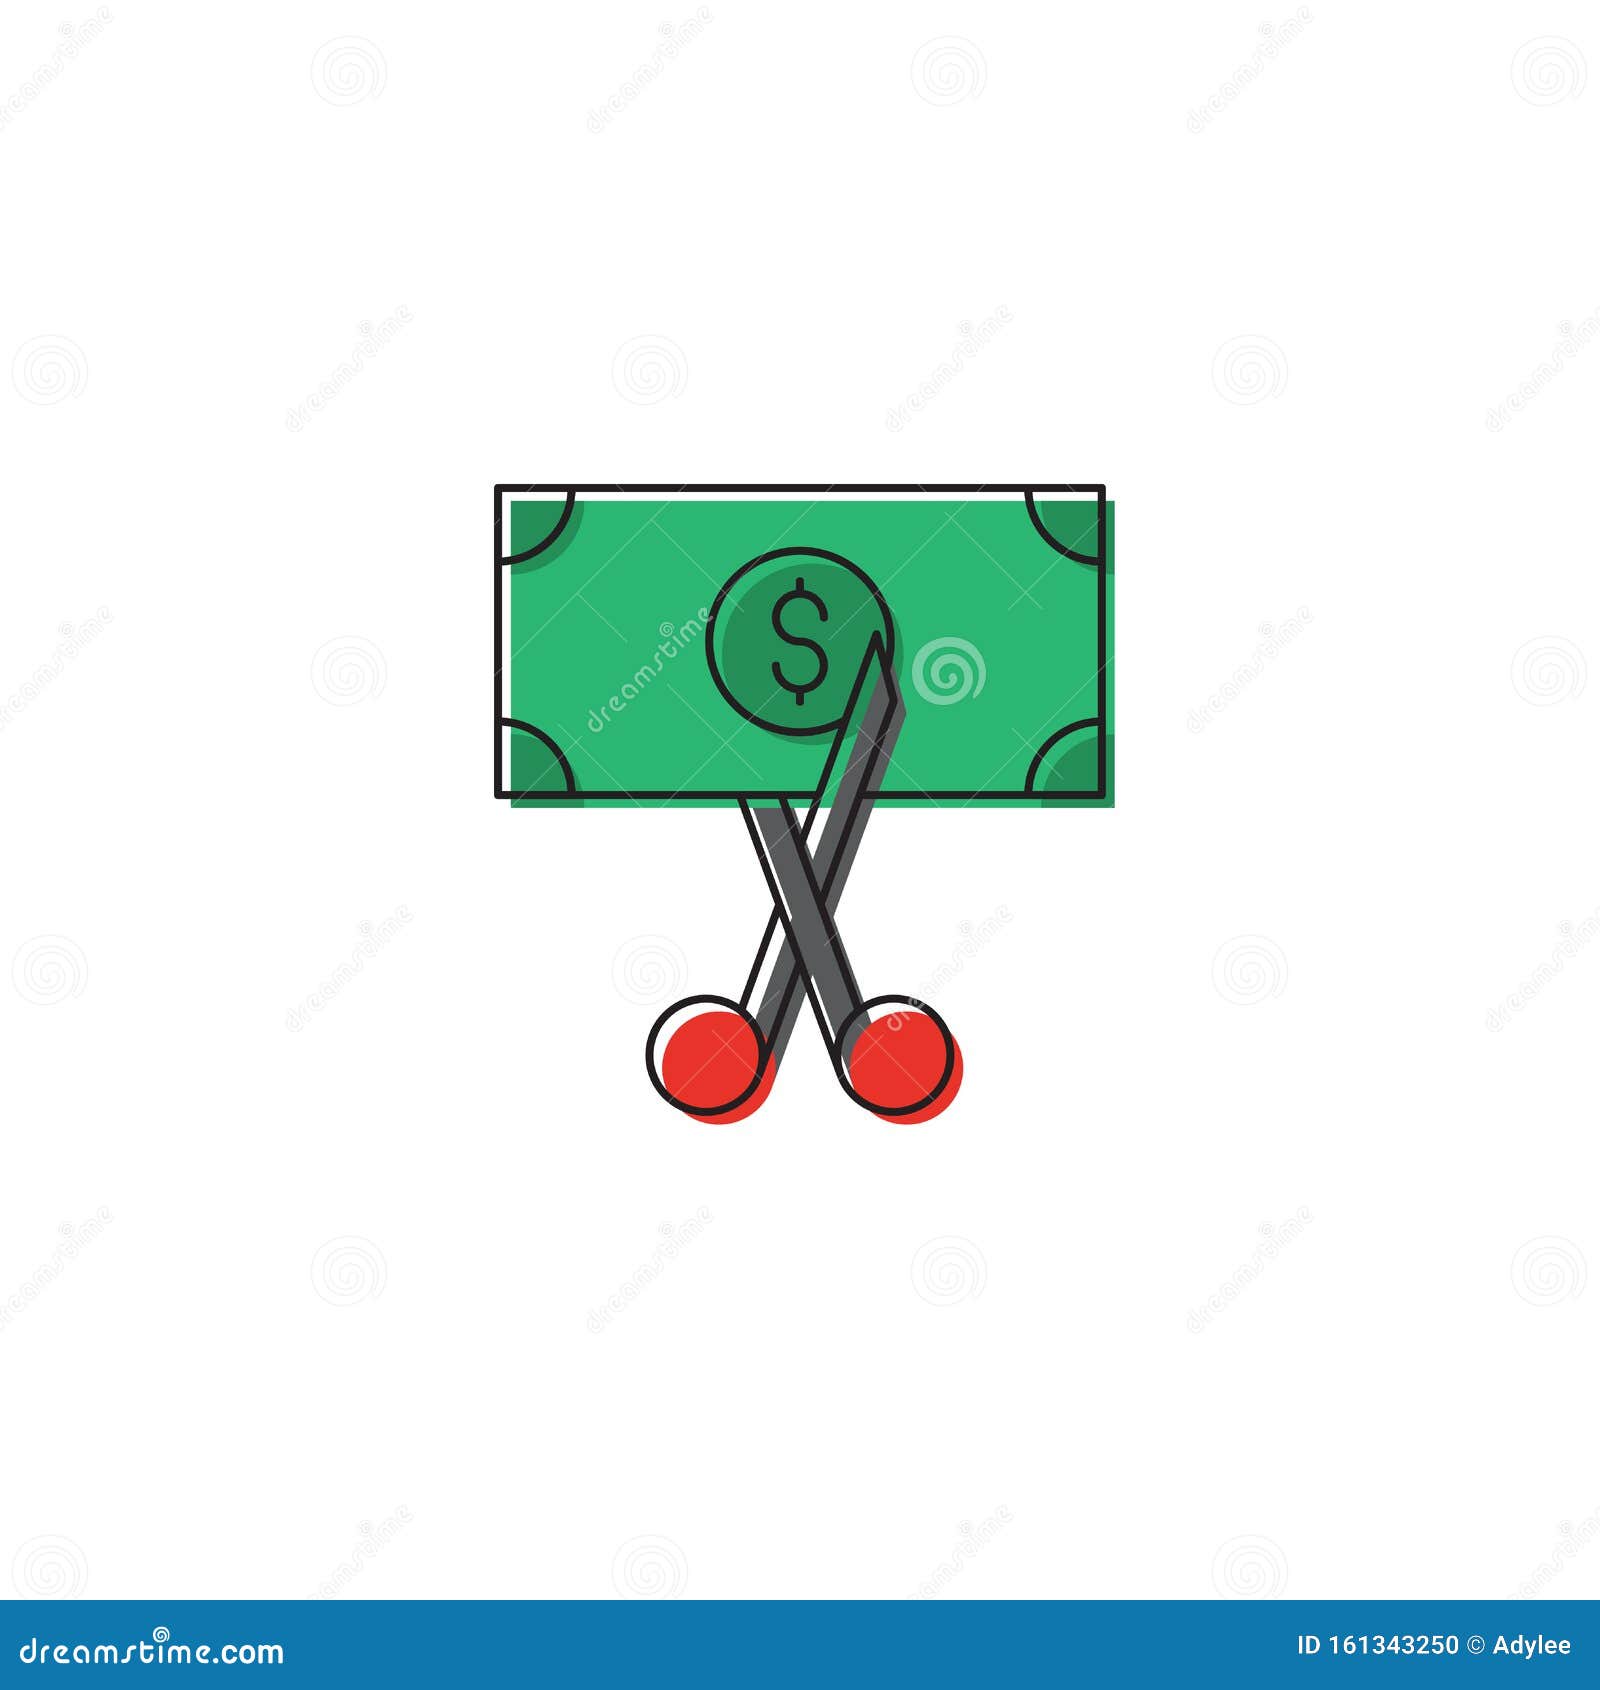 Scissors Cutting Money Bill Vector Icon Symbol Isolated on White ...